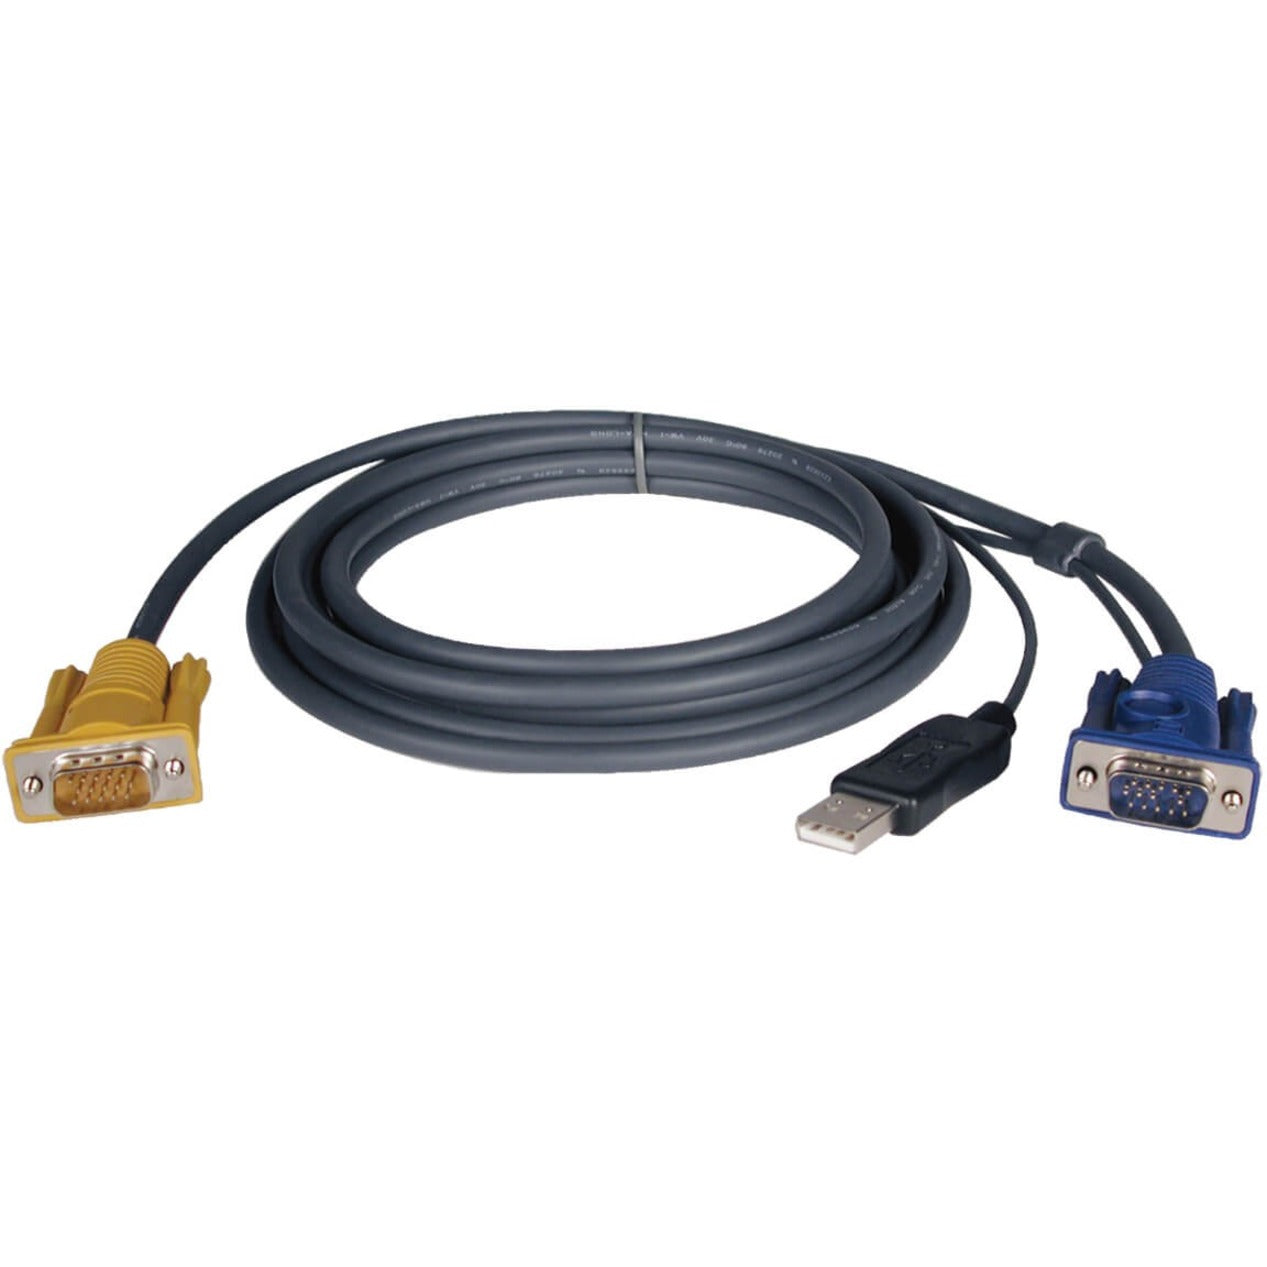 Tripp Lite P776-019 KVM Cable Kit for B020/022 Series KVM, Superior Performance and Cable Management